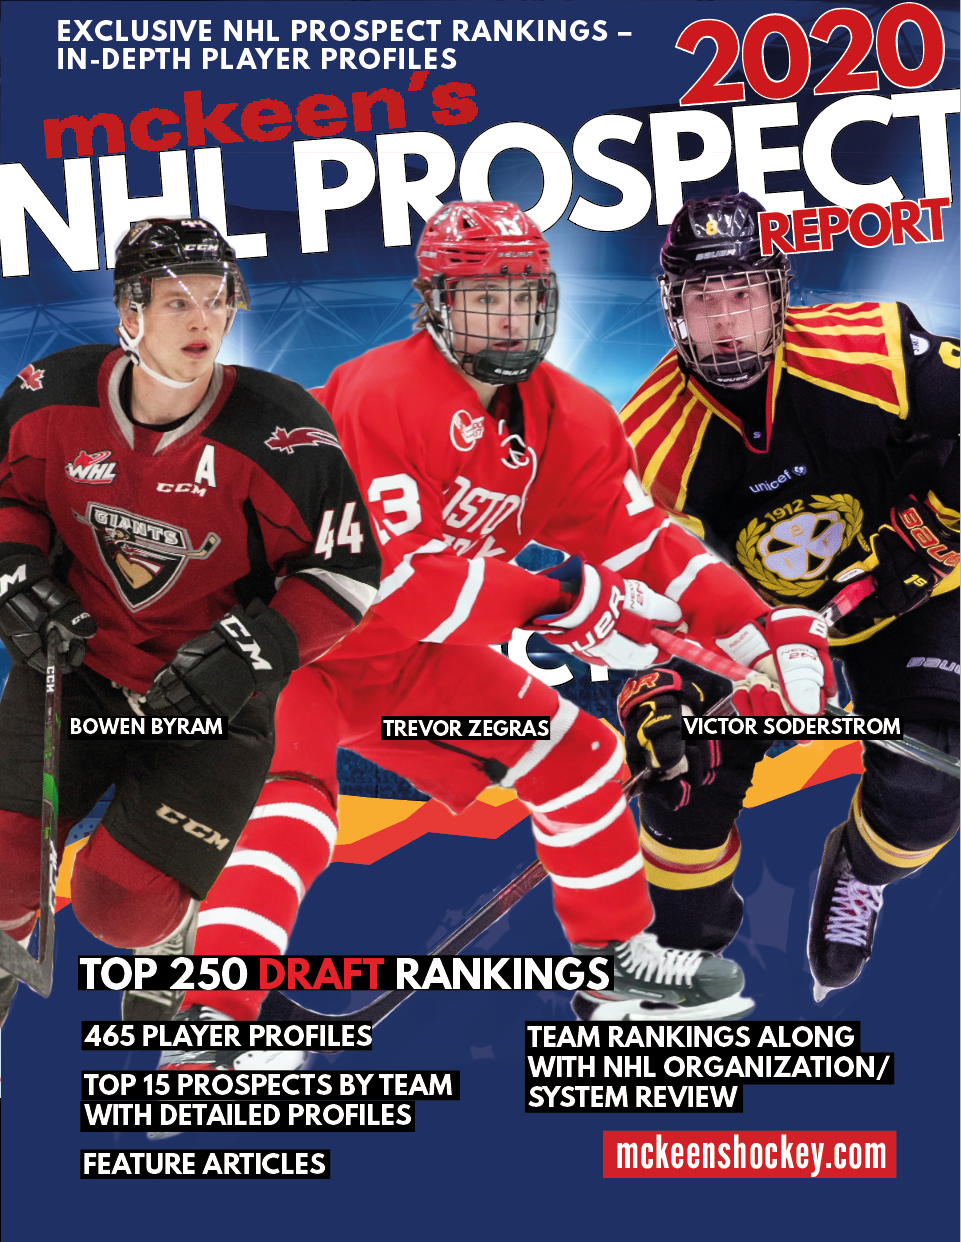 nhl prospect rankings by team